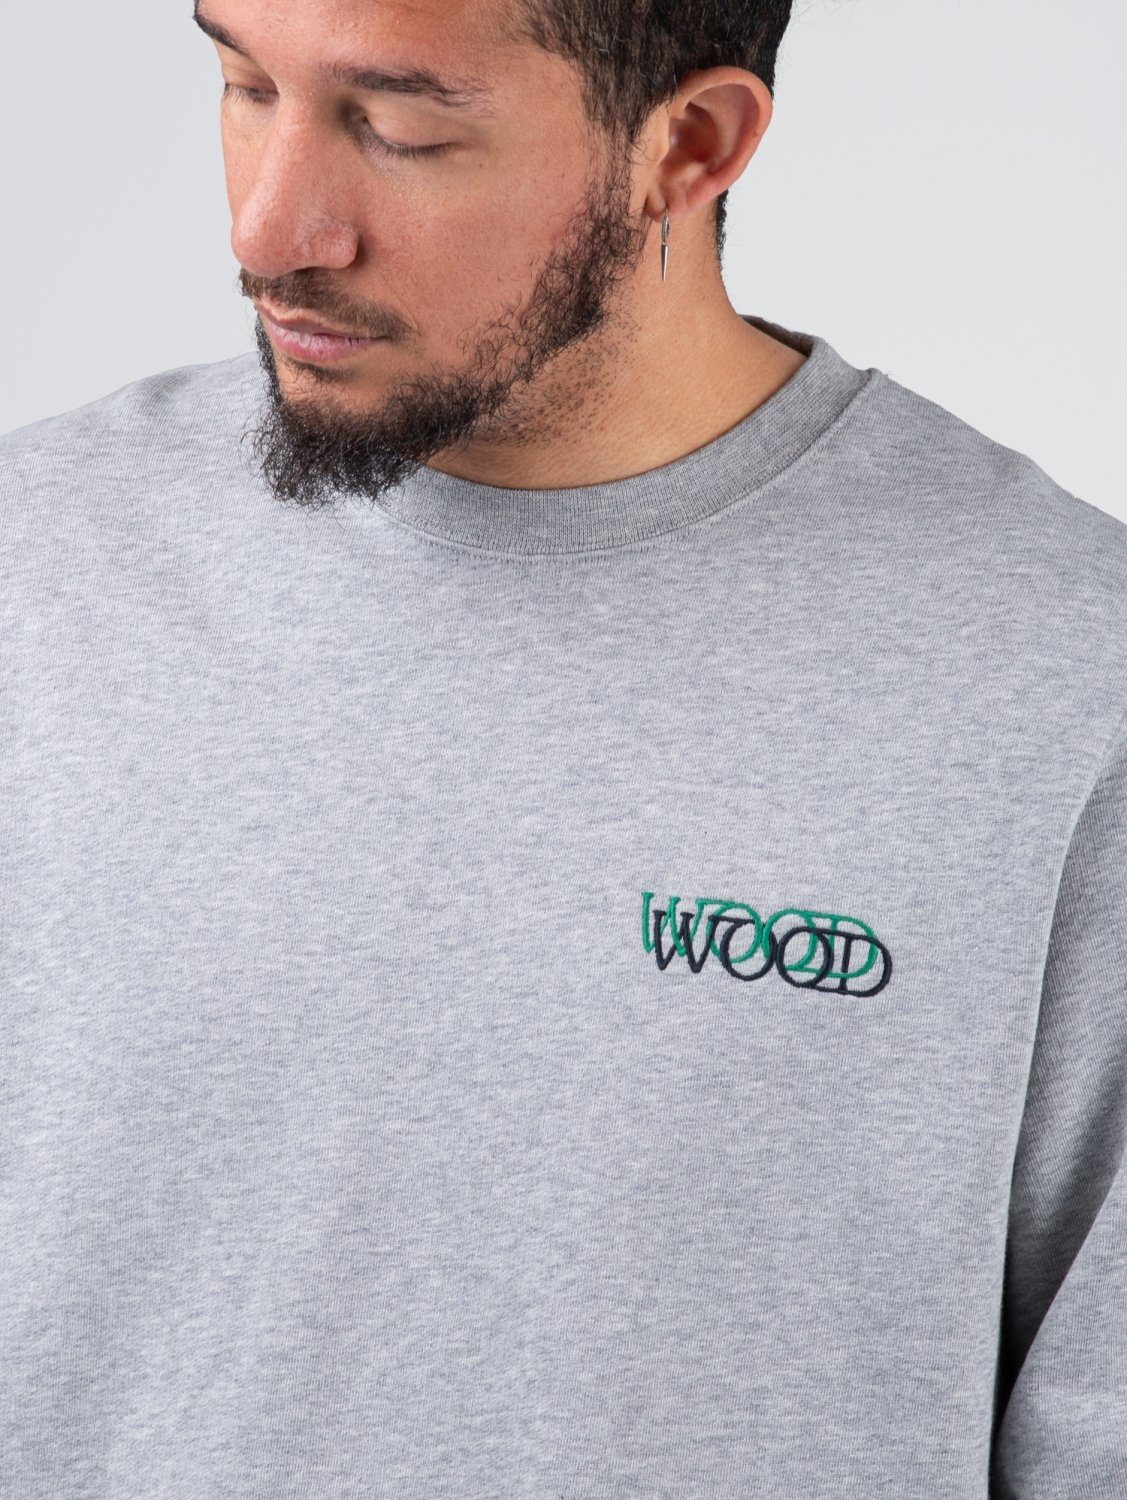 Sweater Hugh WOOD Sweatshirt Wood Melange Wood Logo WOOD Grey